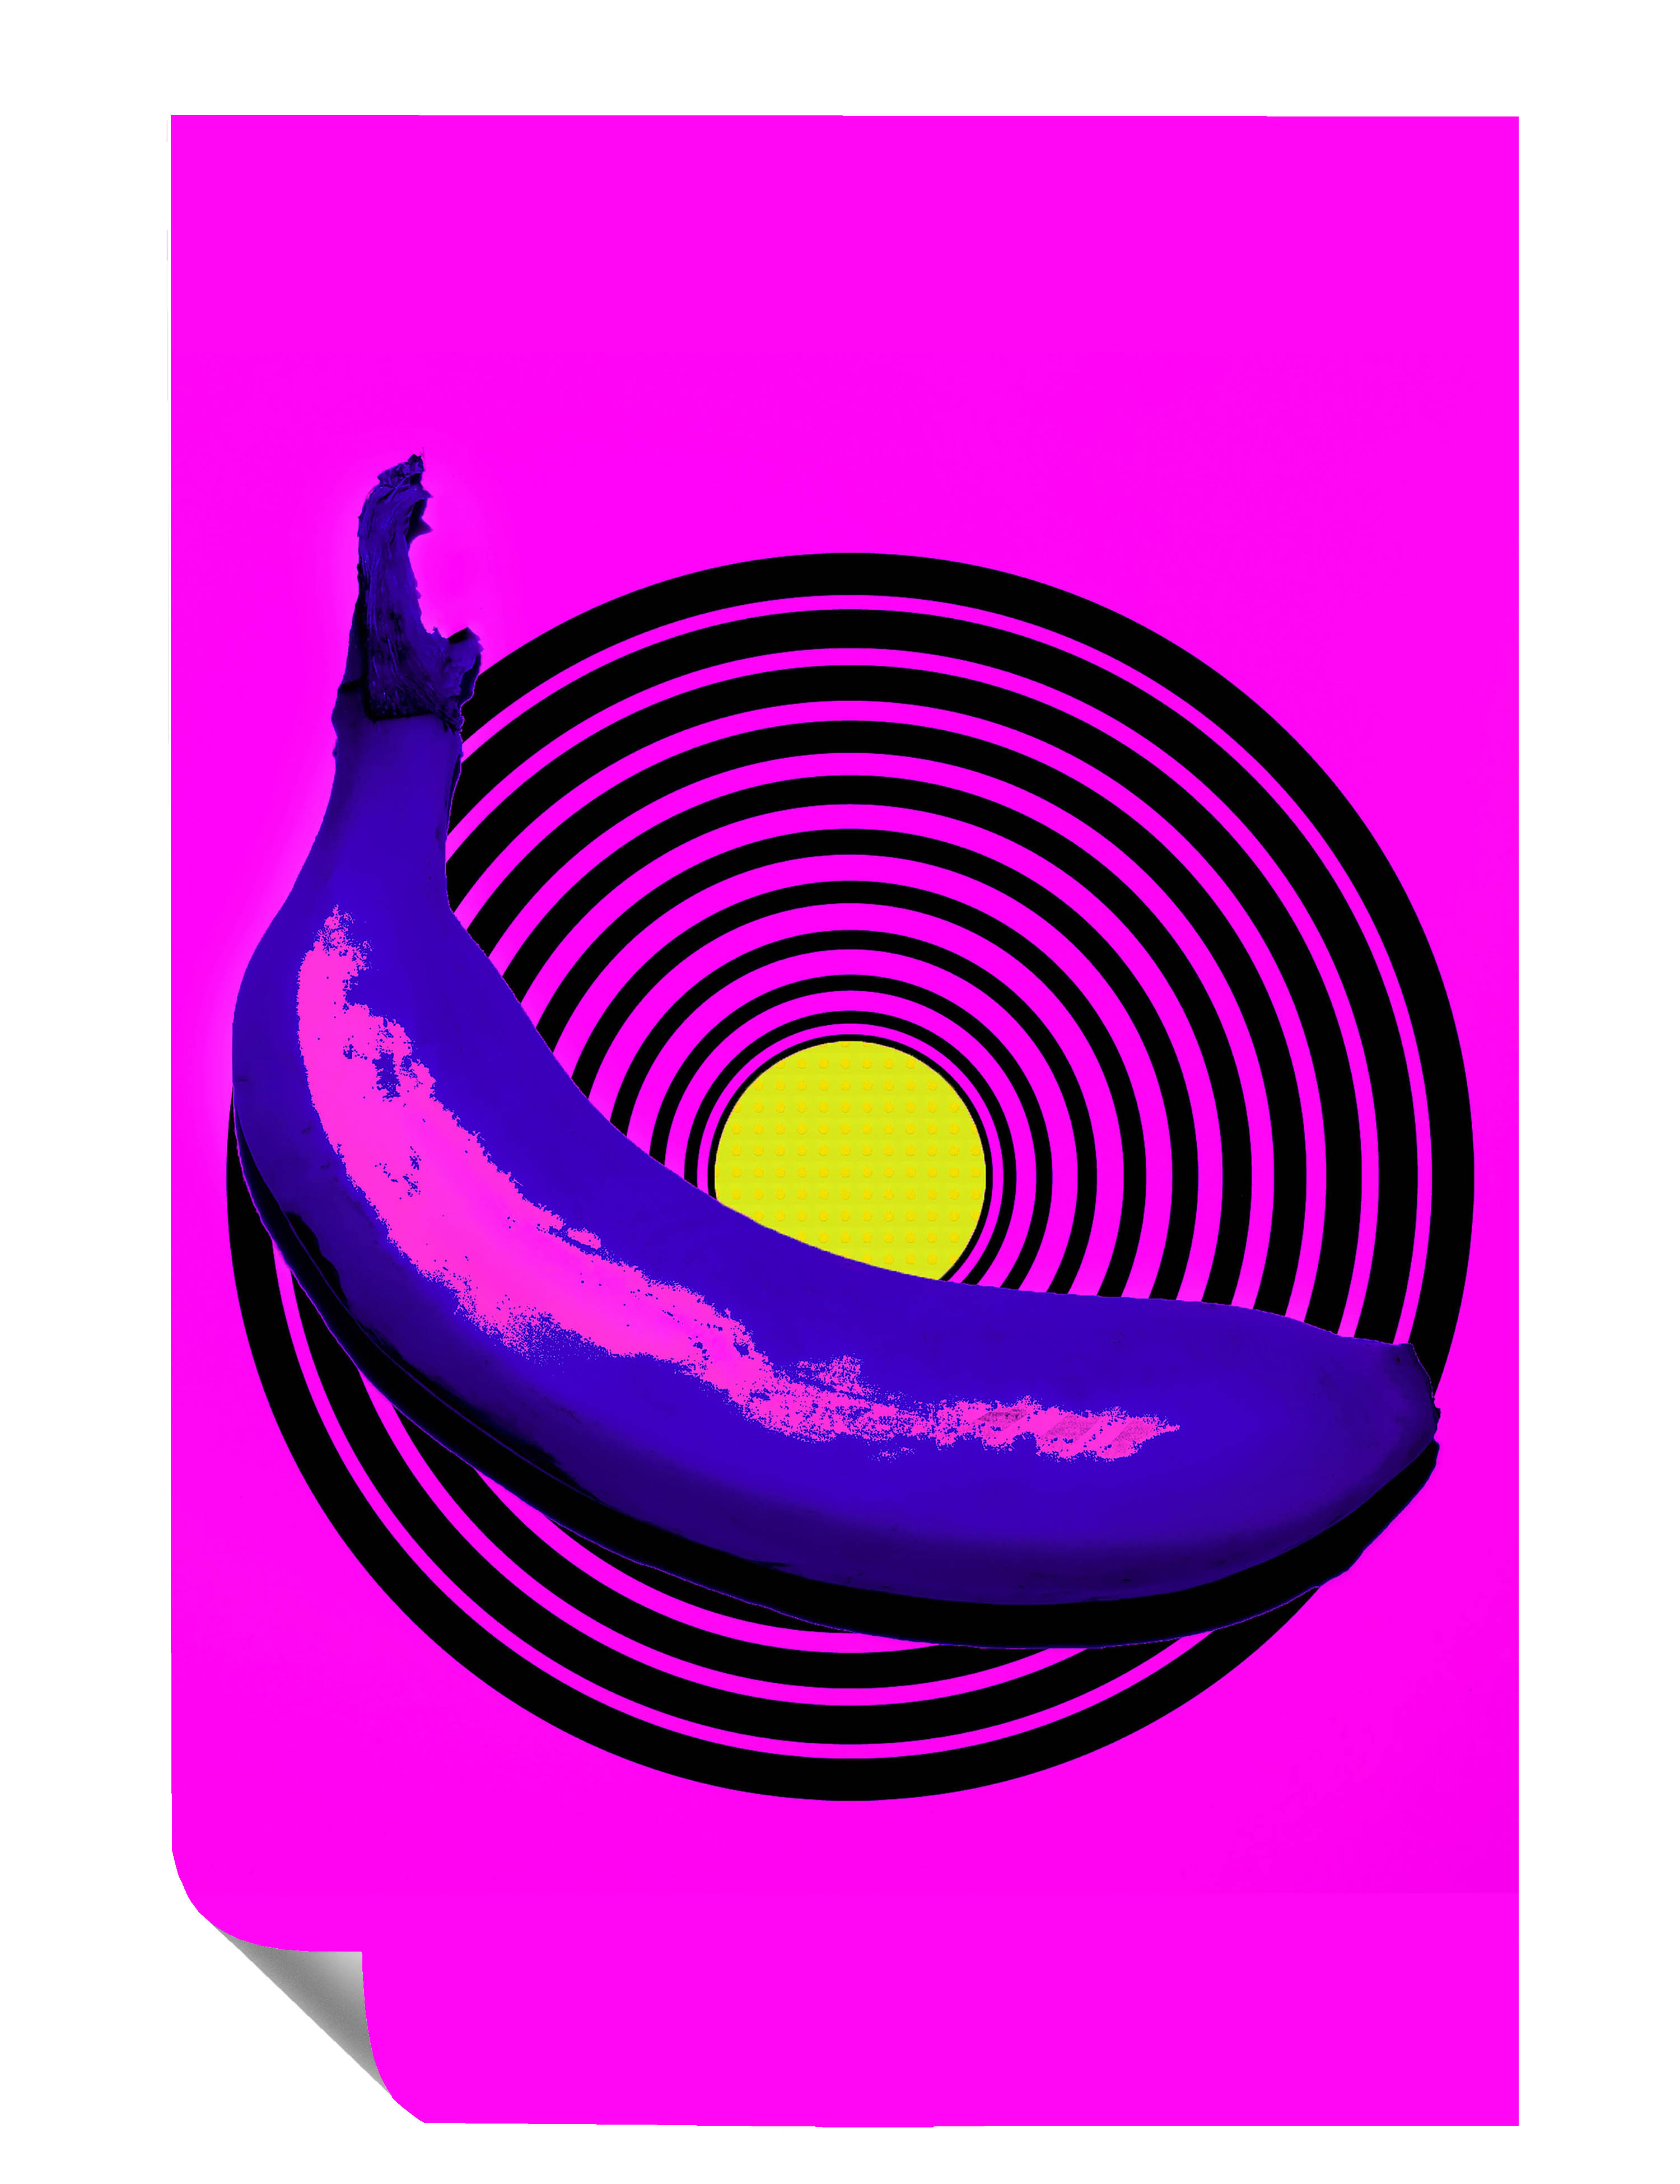 Banane Schallplatte Popart Illustration Kunstdruck Poster P0372